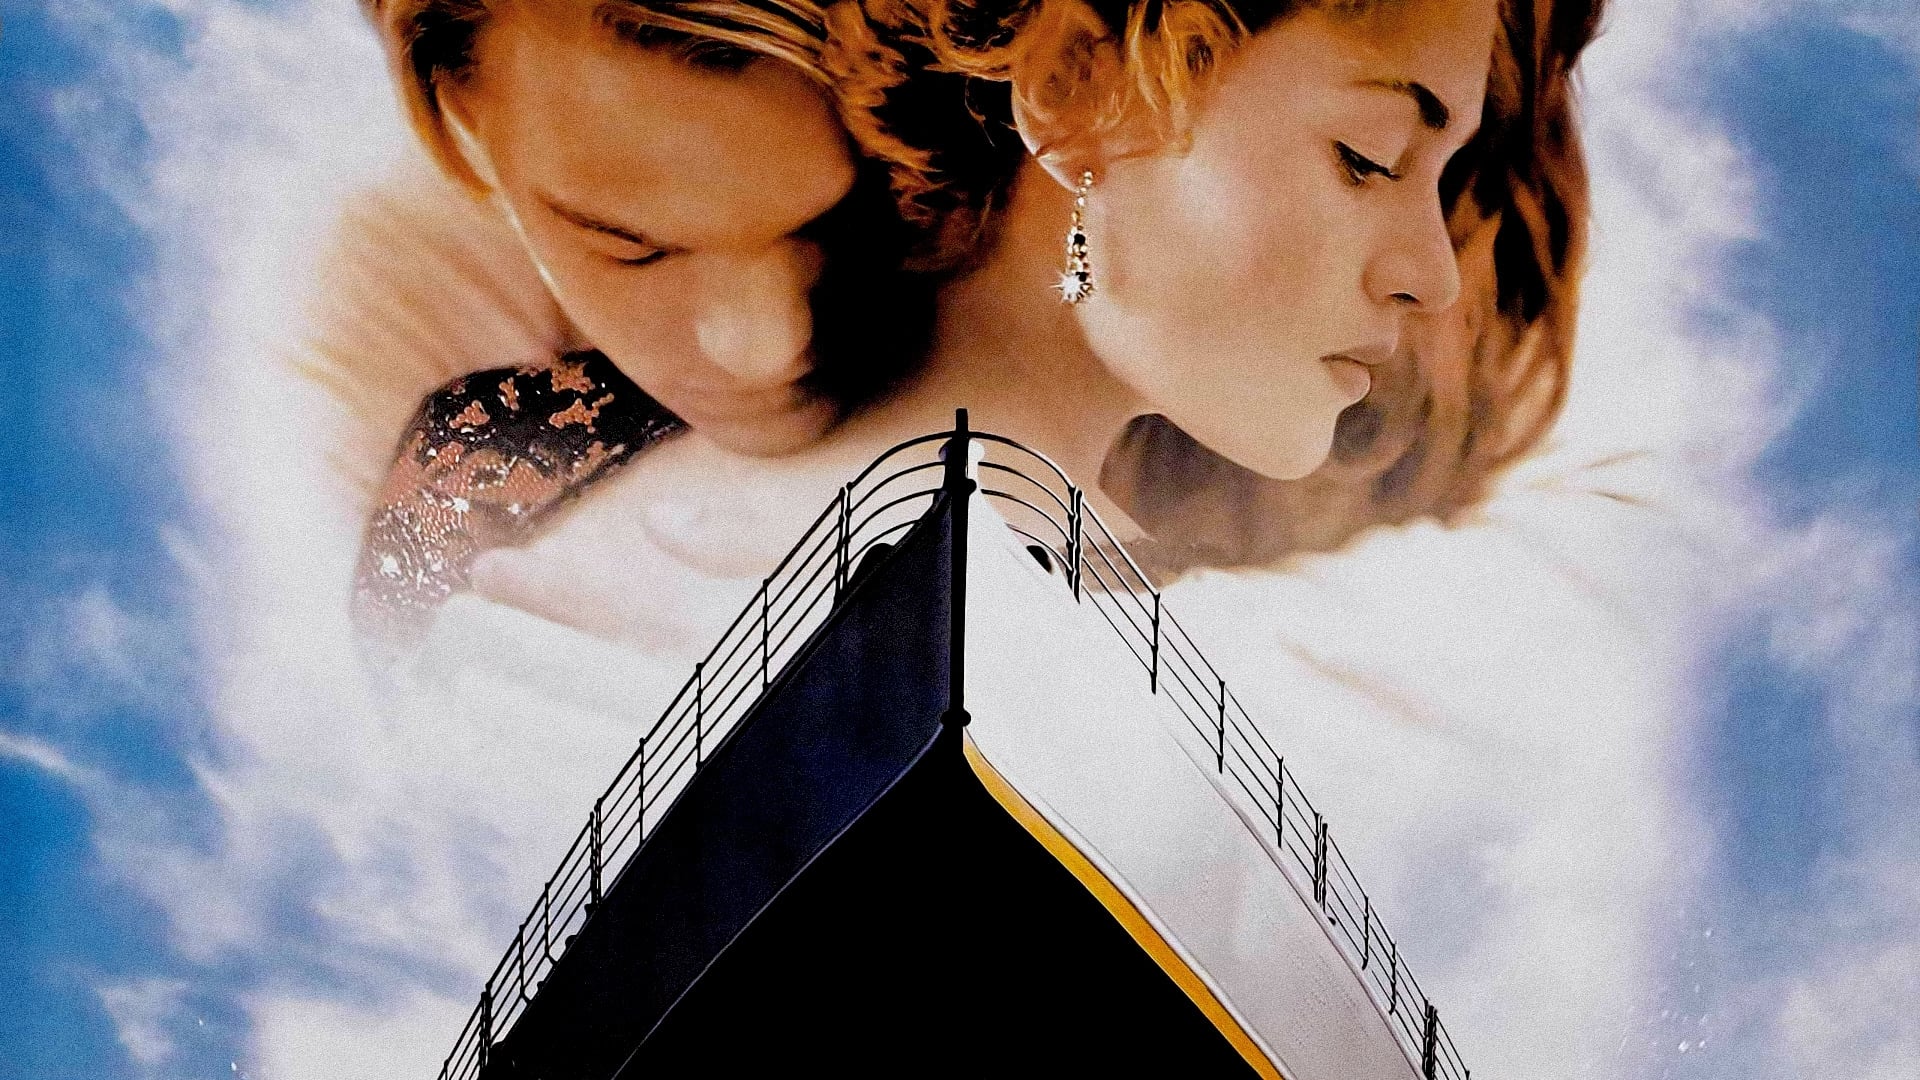 Image du film Titanic 7u7macjevslrks5ao5ynohjeckkjpg